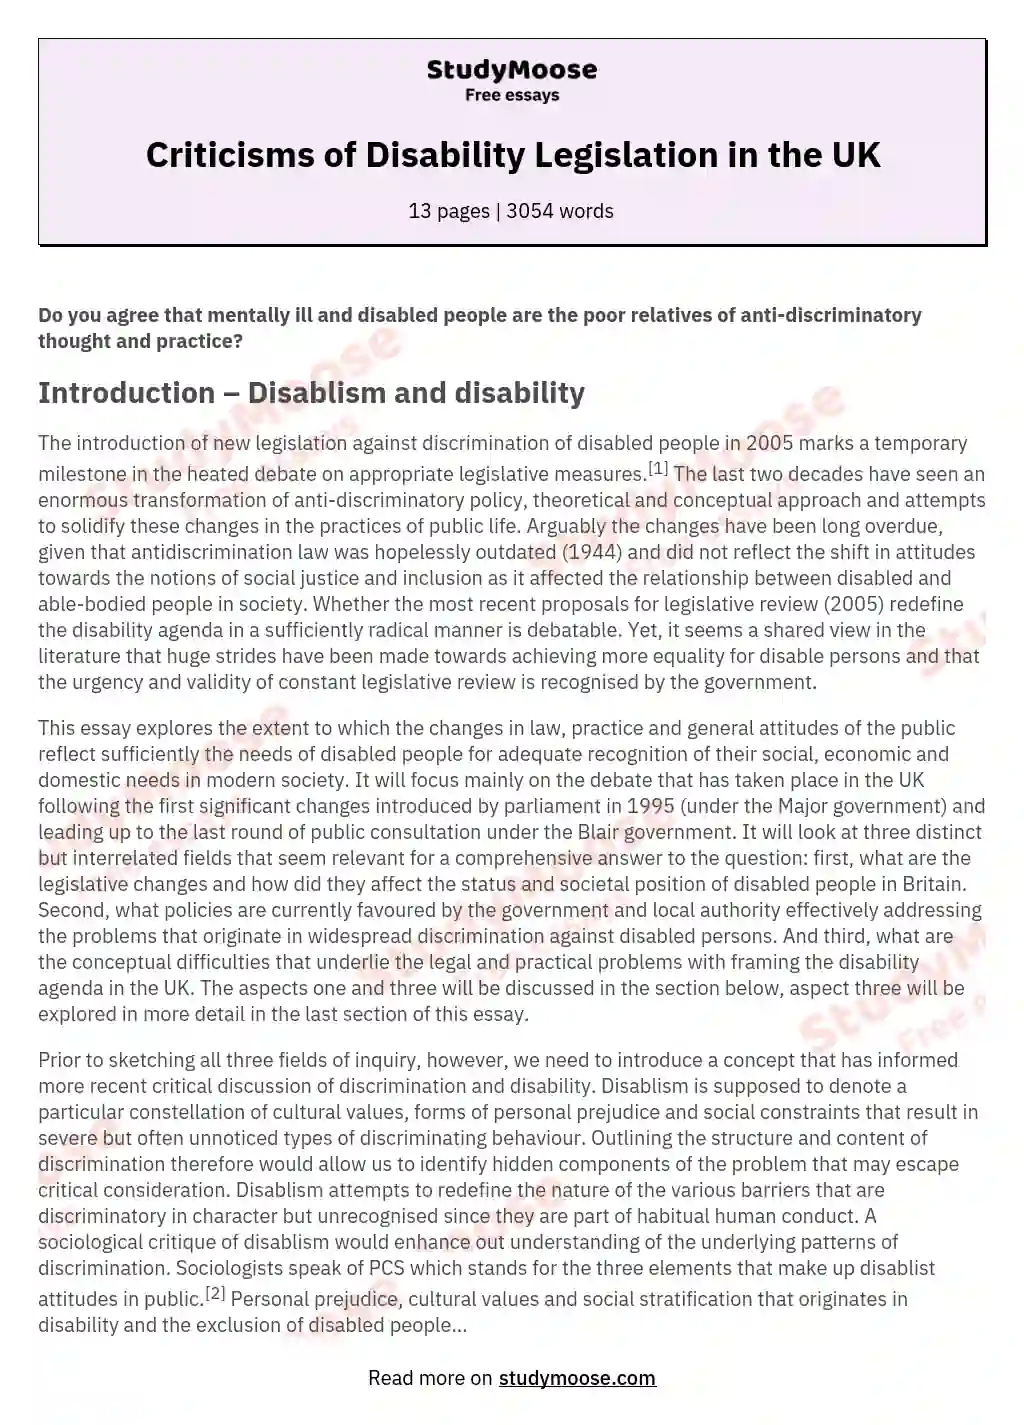 Criticisms of Disability Legislation in the UK essay